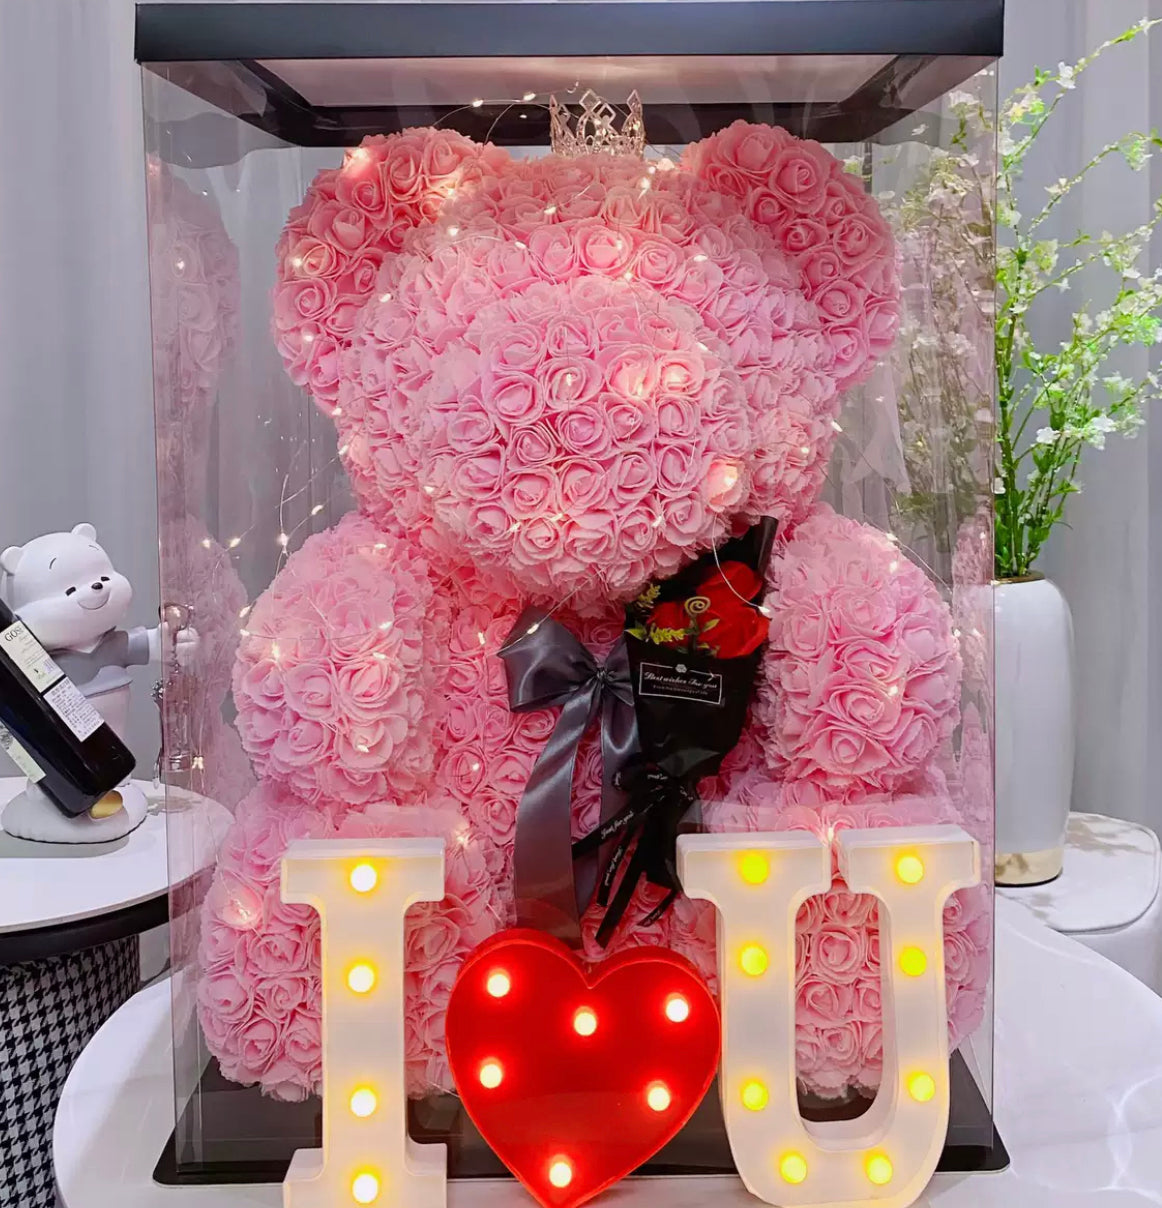 520 Eternal Flower Rose Bear Delight Box with Gift Packaging